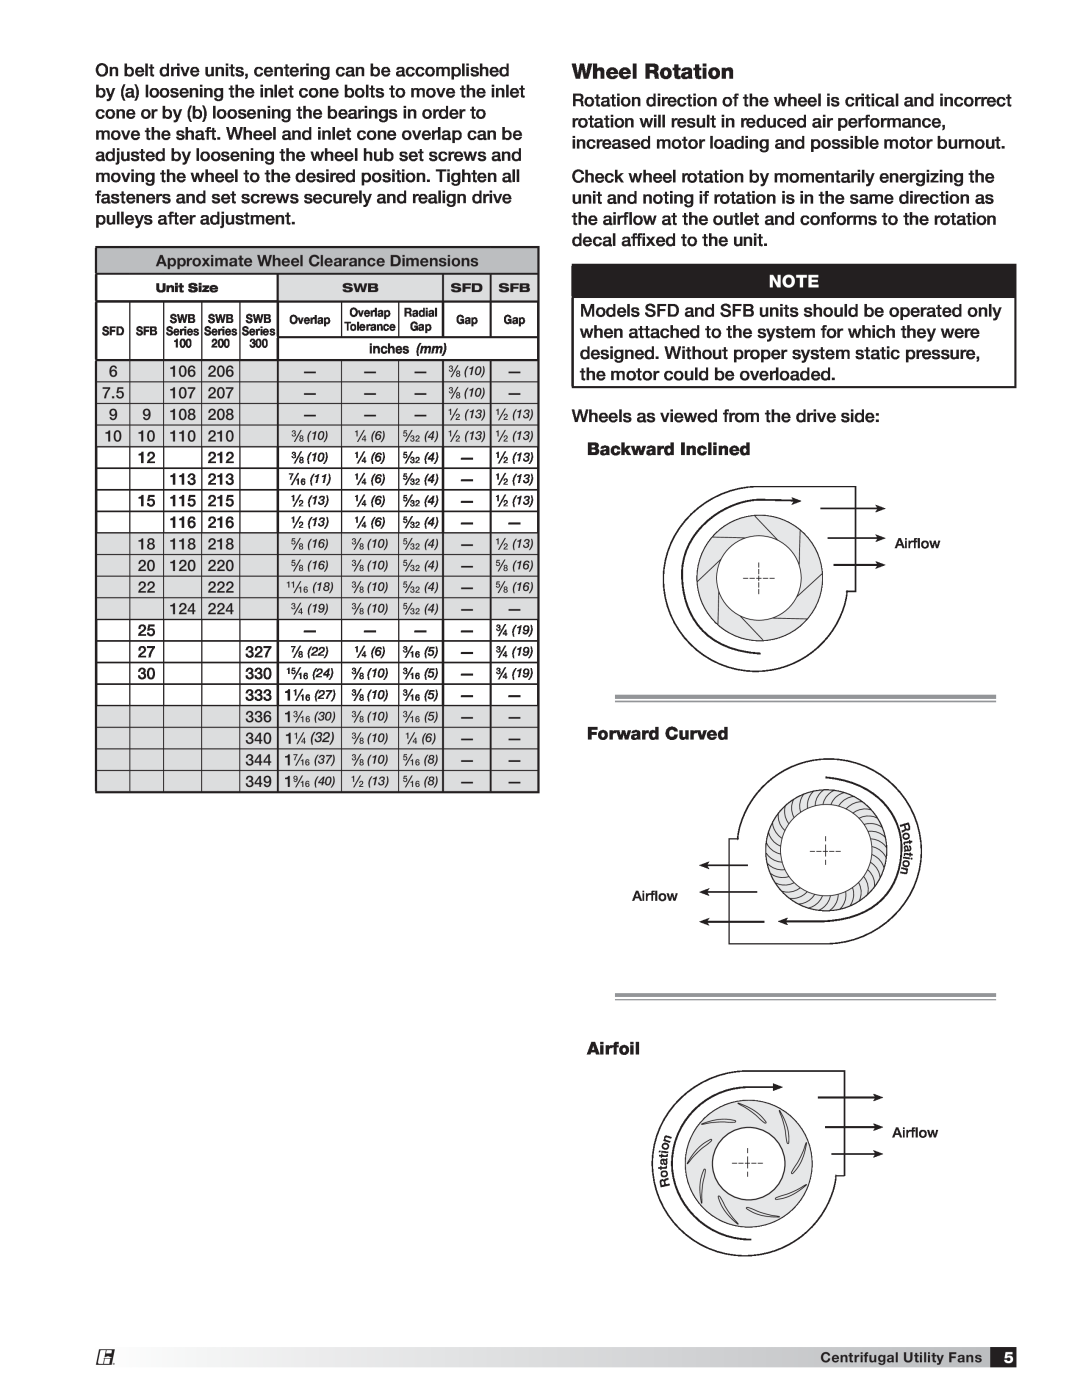 Greenheck Fan Model SWB Series 100, Model SFD manual Wheel Rotation, Backward Inclined, Forward Curved, Airfoil 